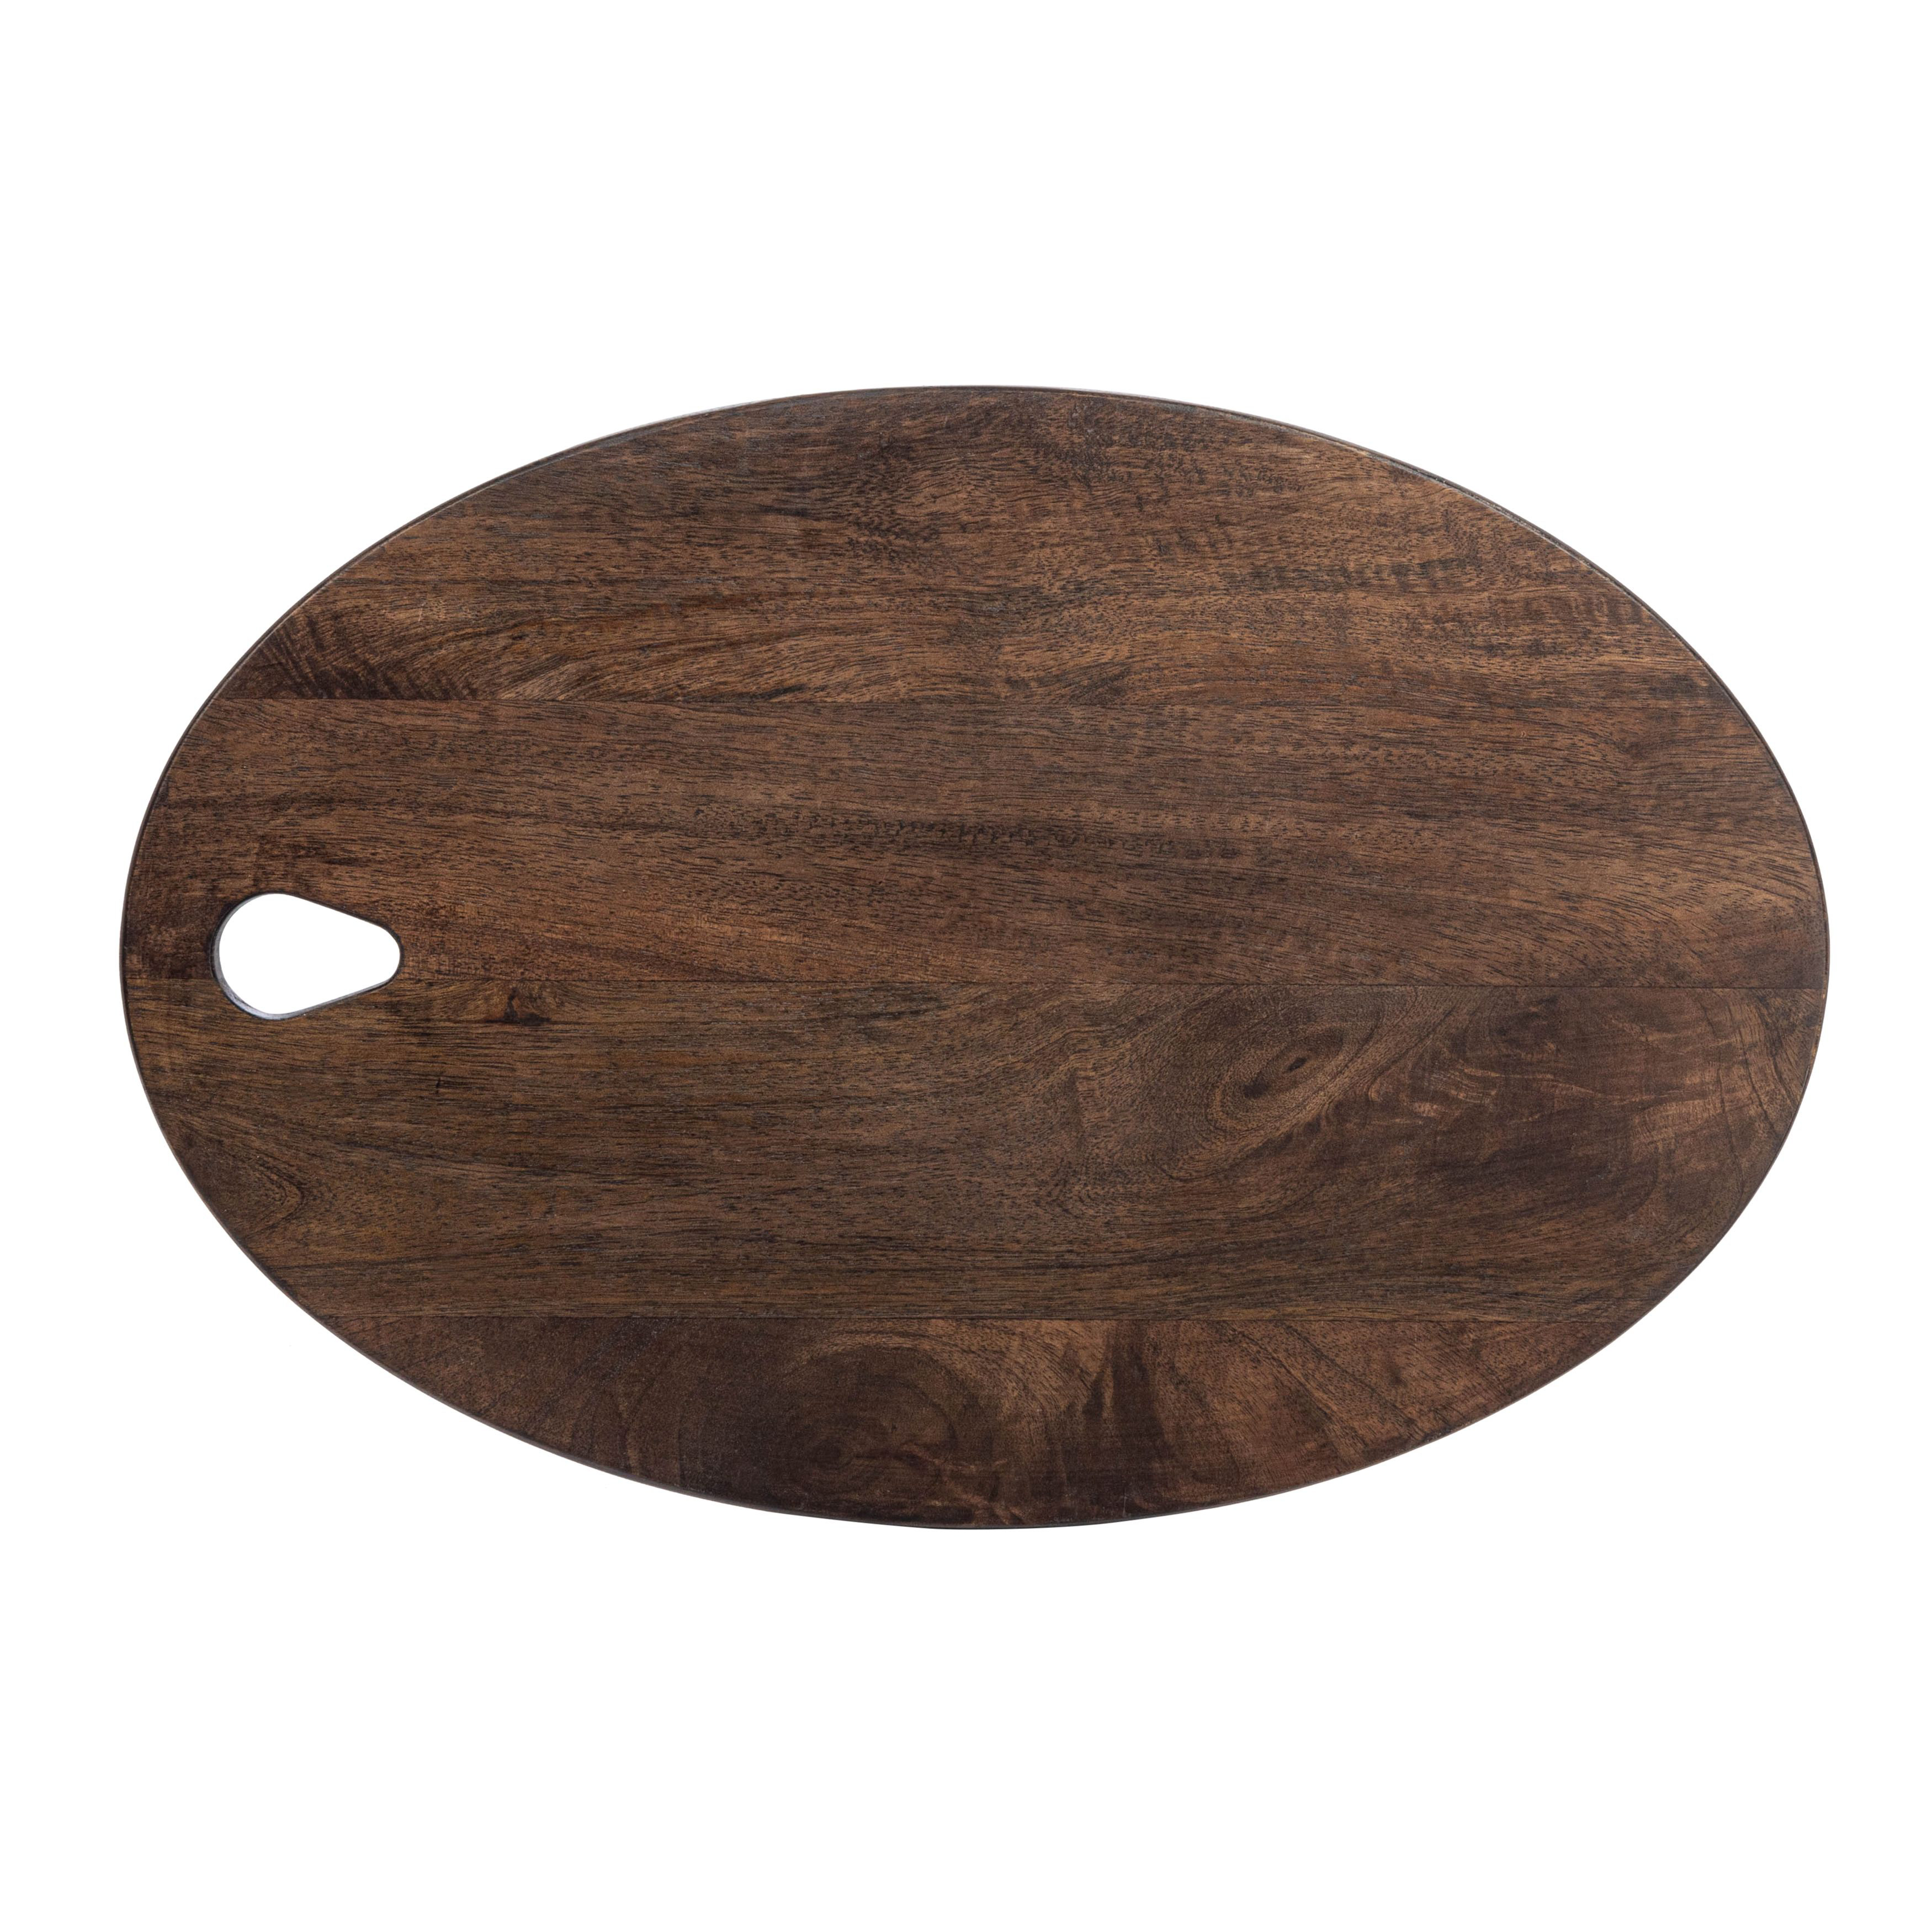 Five star Walnut end grain cutting board Handmade large butcher block  charcuterie board Wood serving board Wooden serving tray